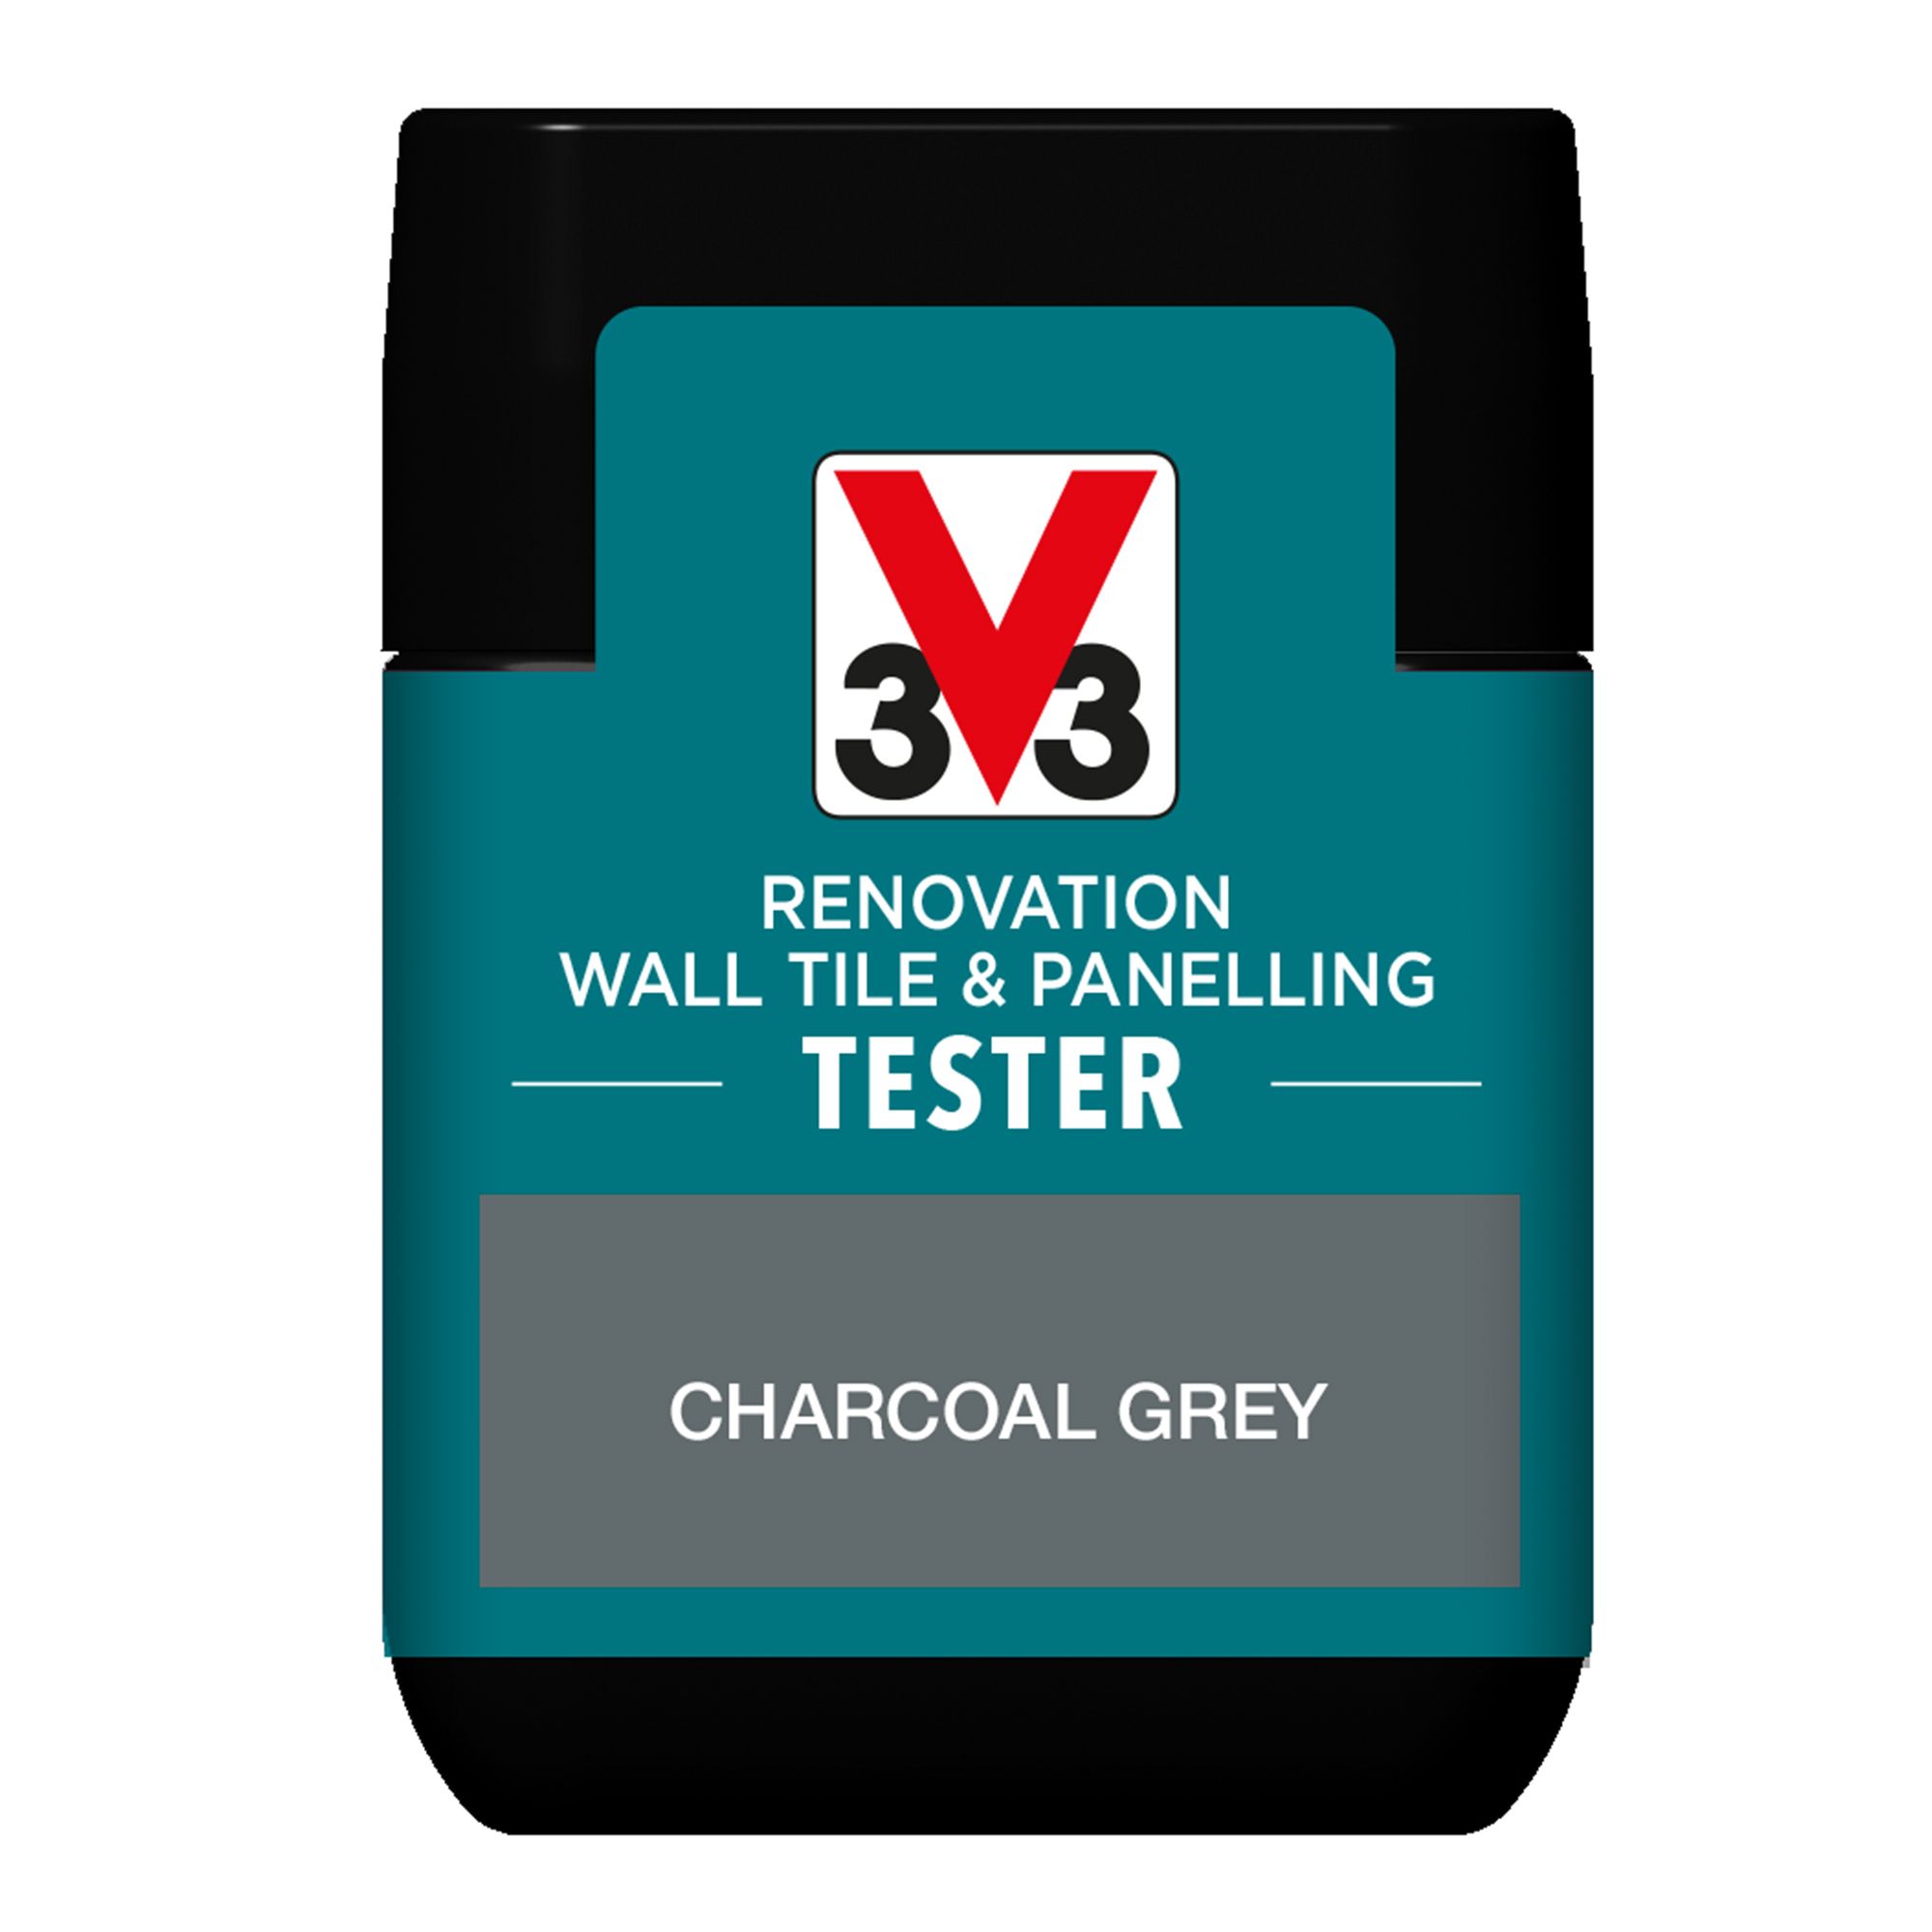 V33 Renovation Charcoal Grey Satinwood Wall tile & panelling paint, 75ml Tester pot